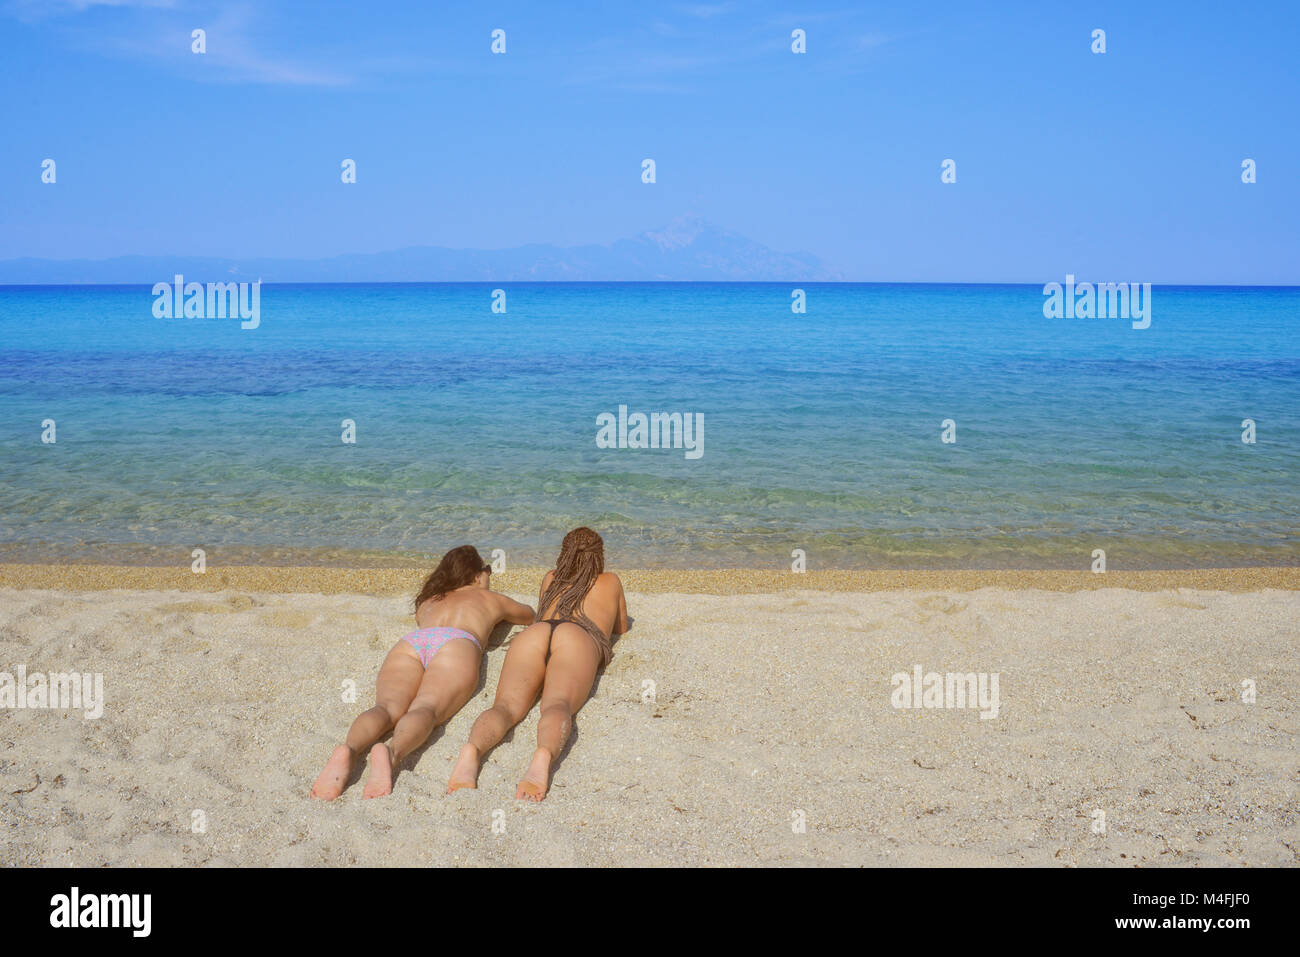 Two beautiful females in bikini lying on a sandy beach over a calm sea. Stock Photo